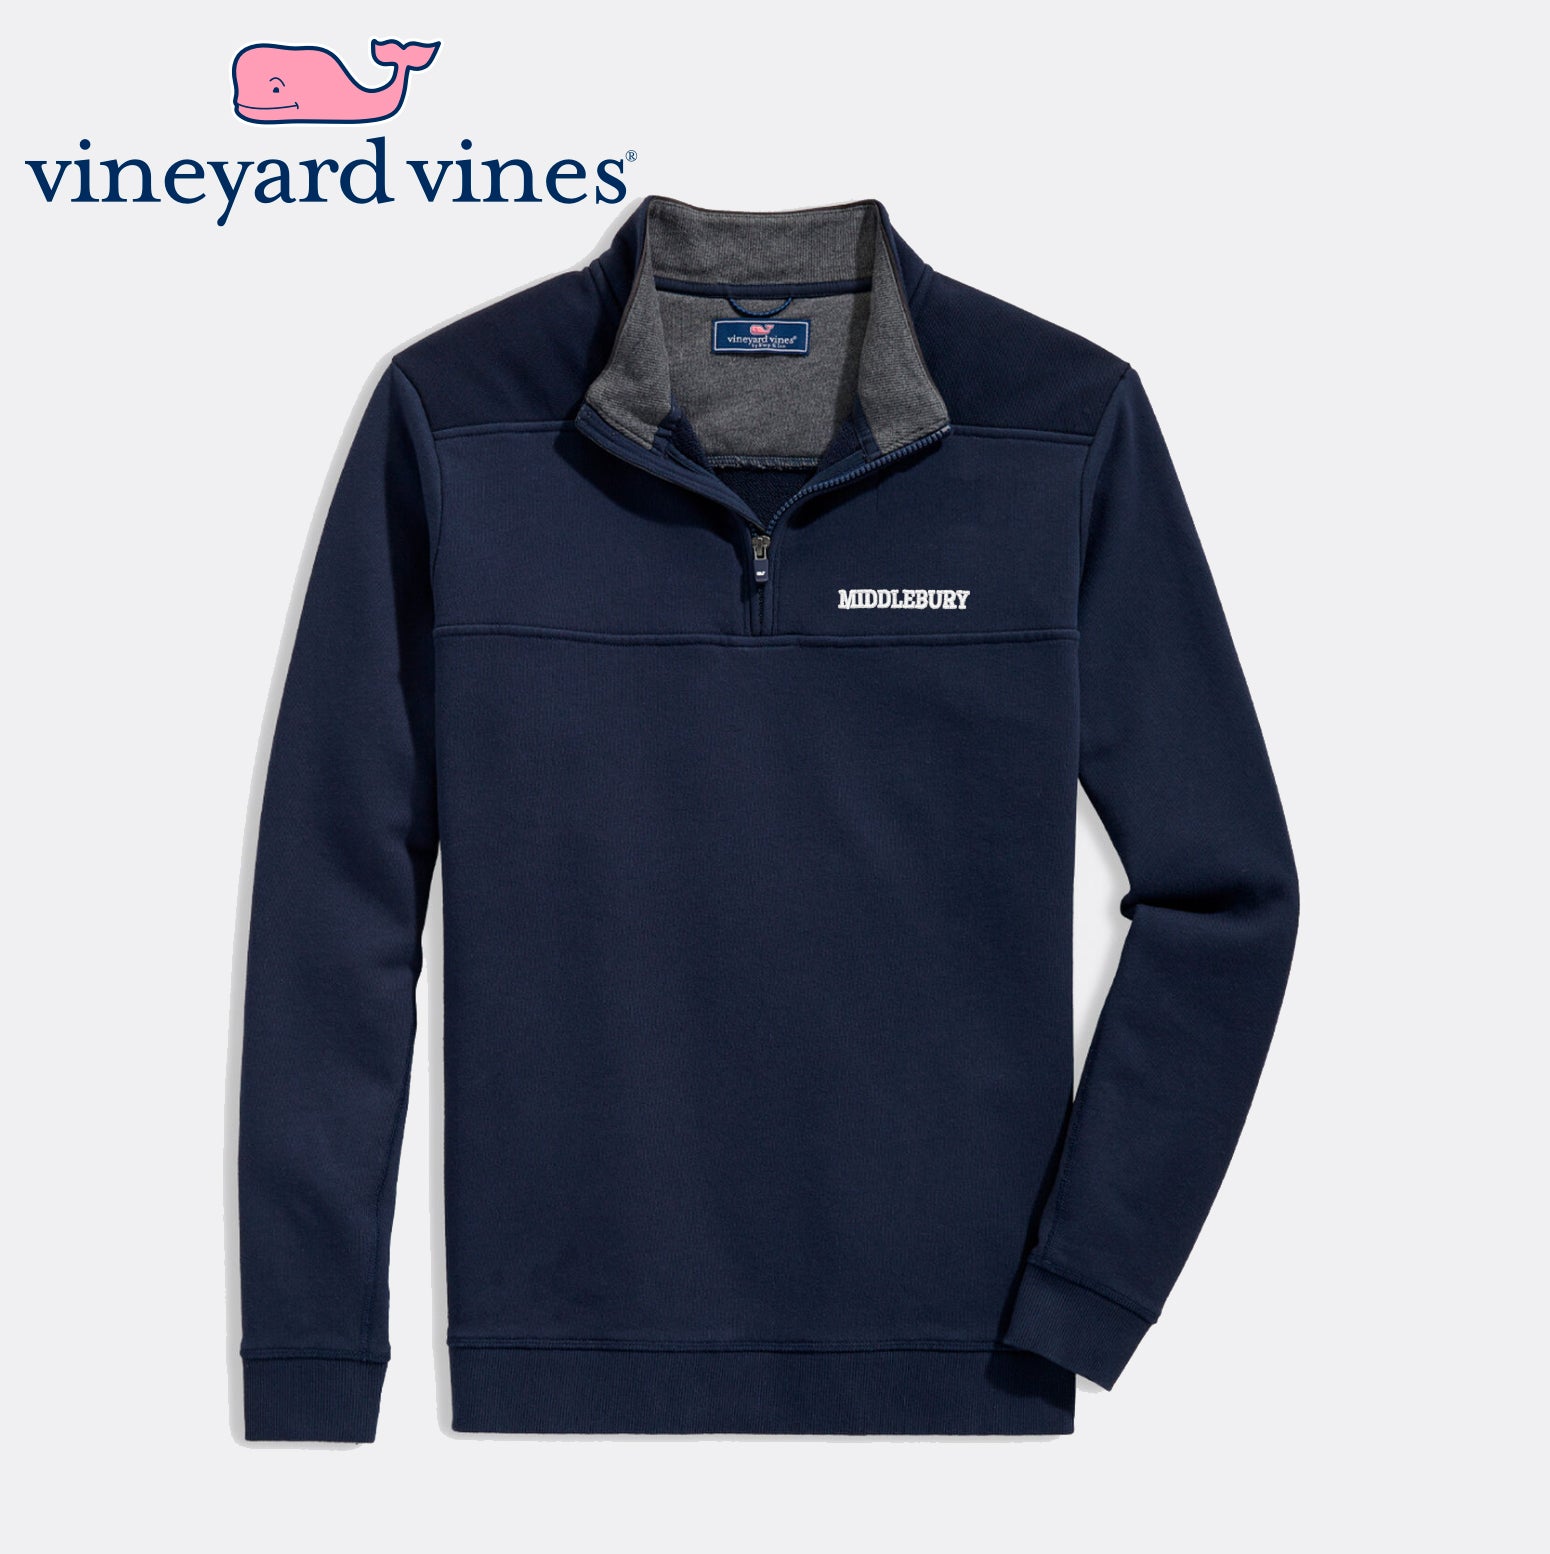 Vineyard Vines Middlebury Men's Shep Shirt Large